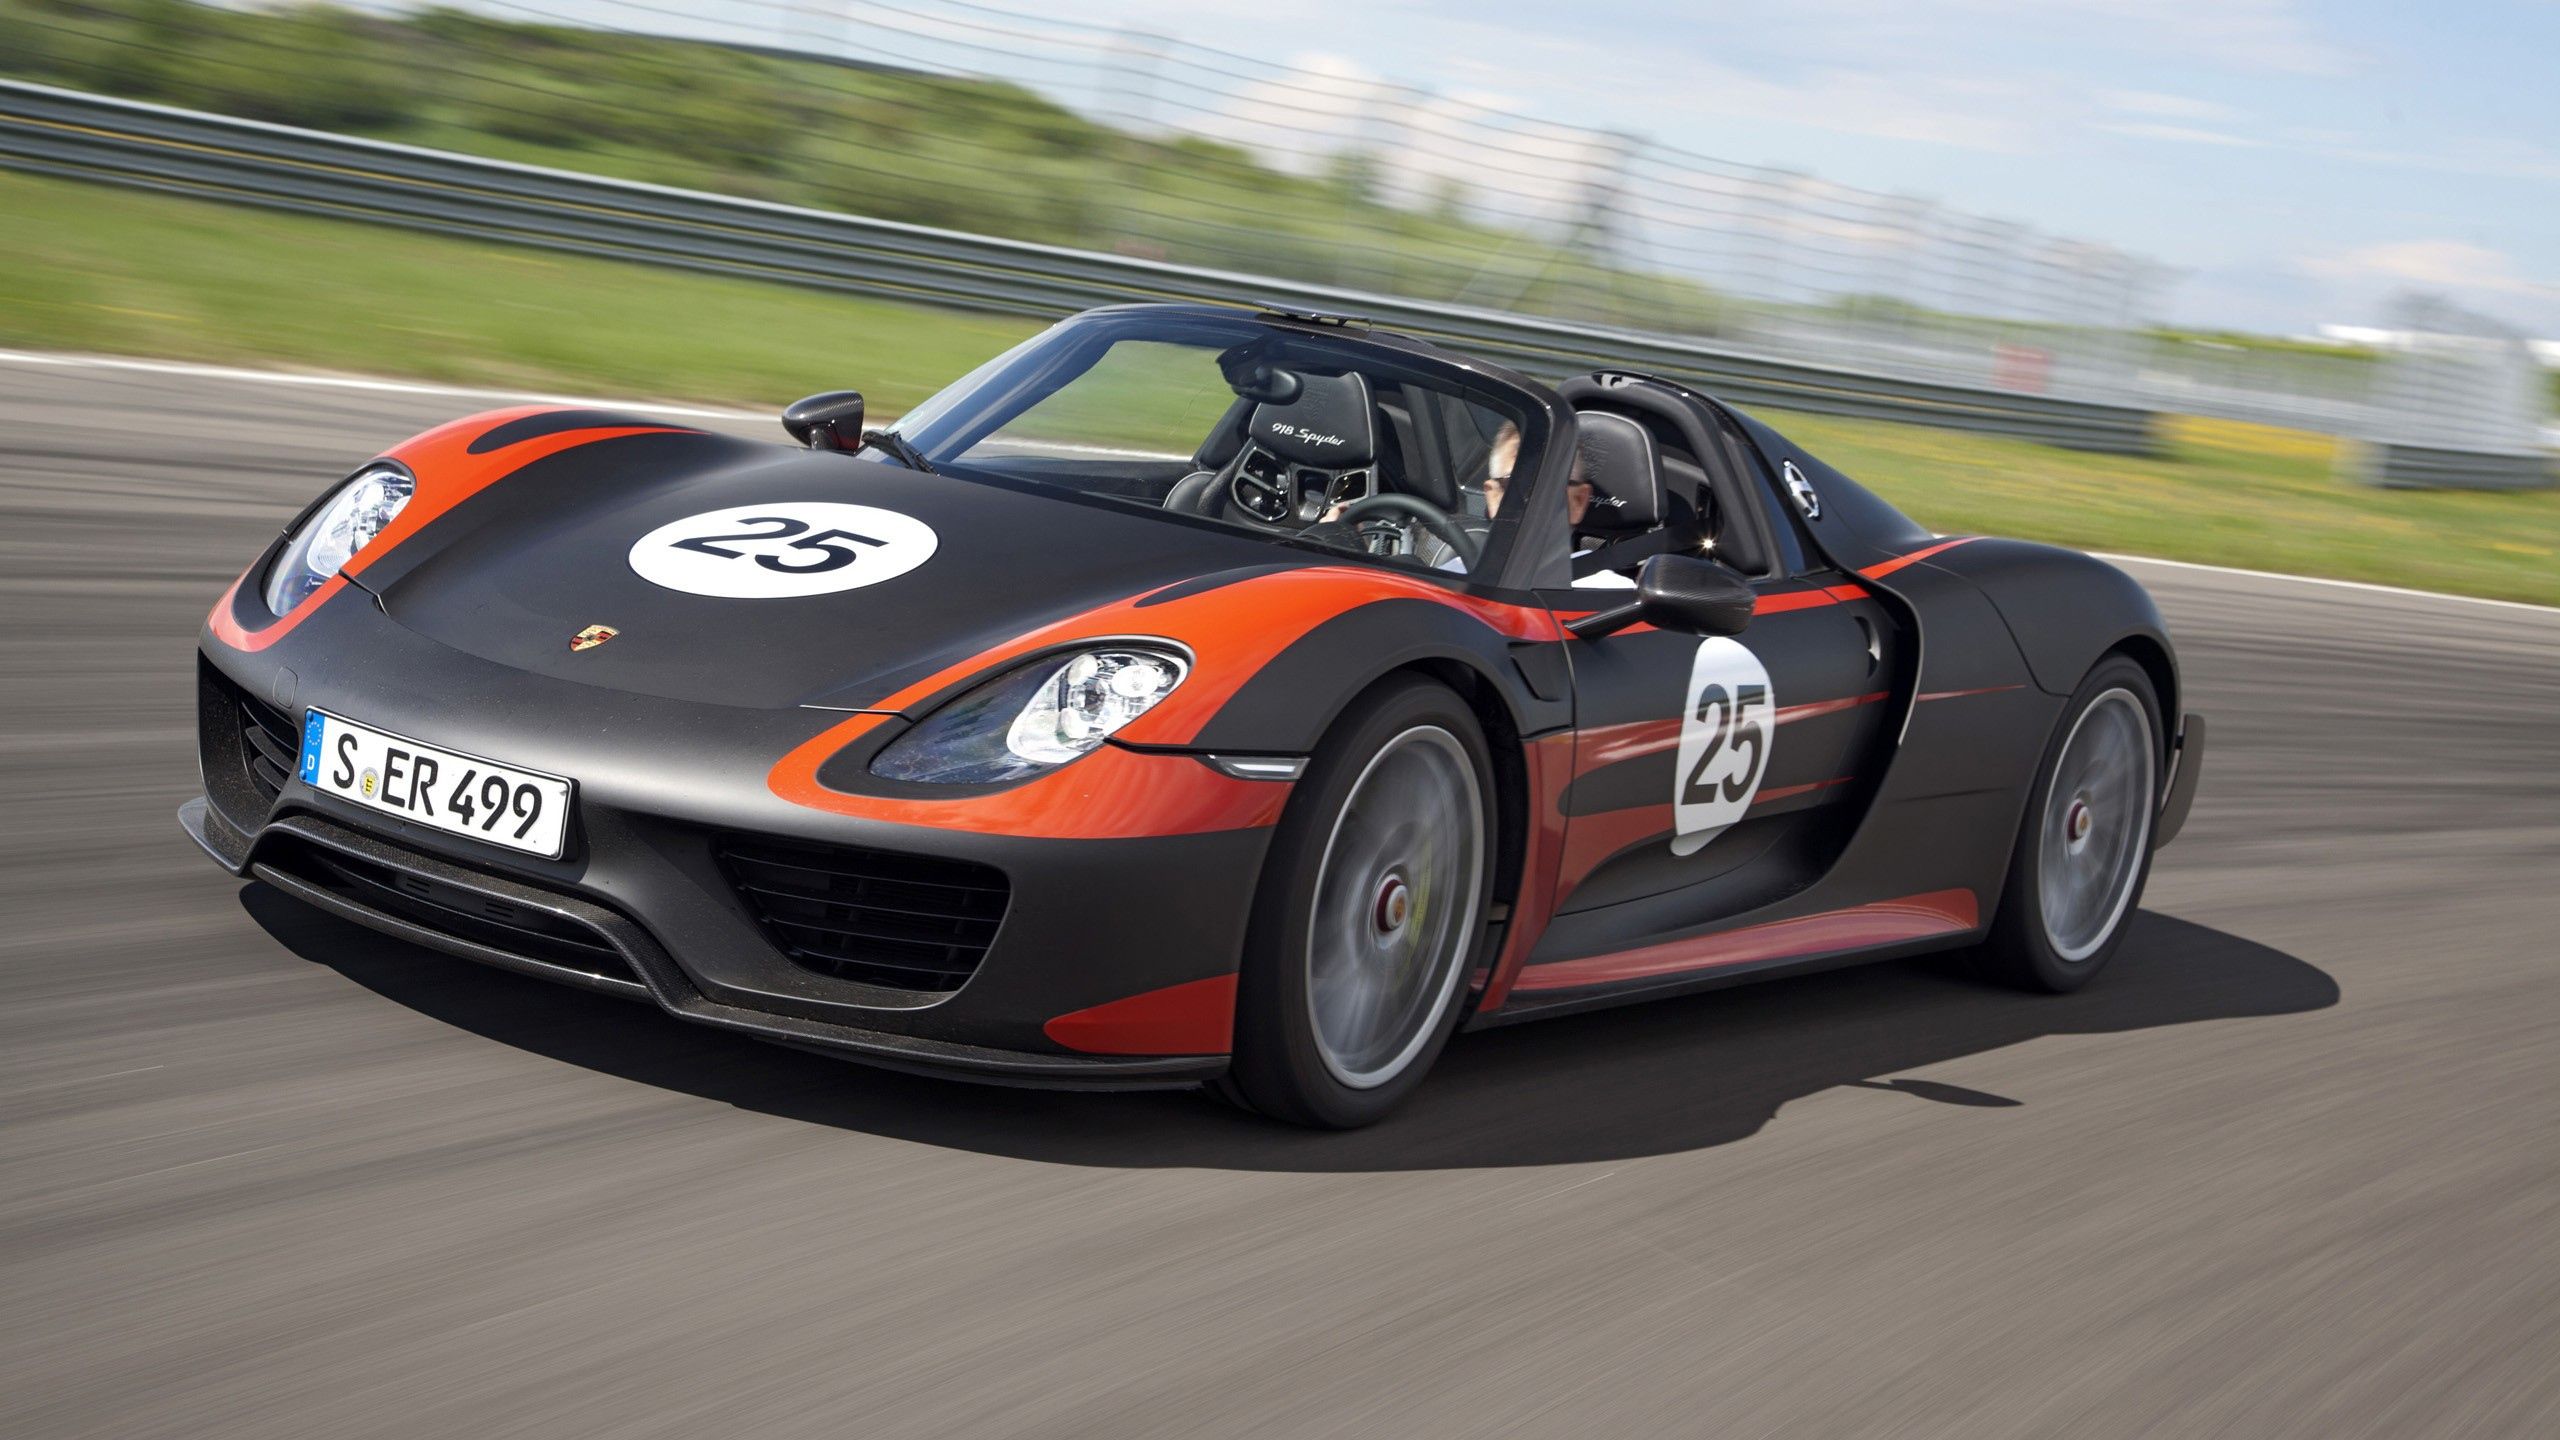 Download Wallpaper 2560x1440 Porsche 918, Auto, Speed, Sports car ...